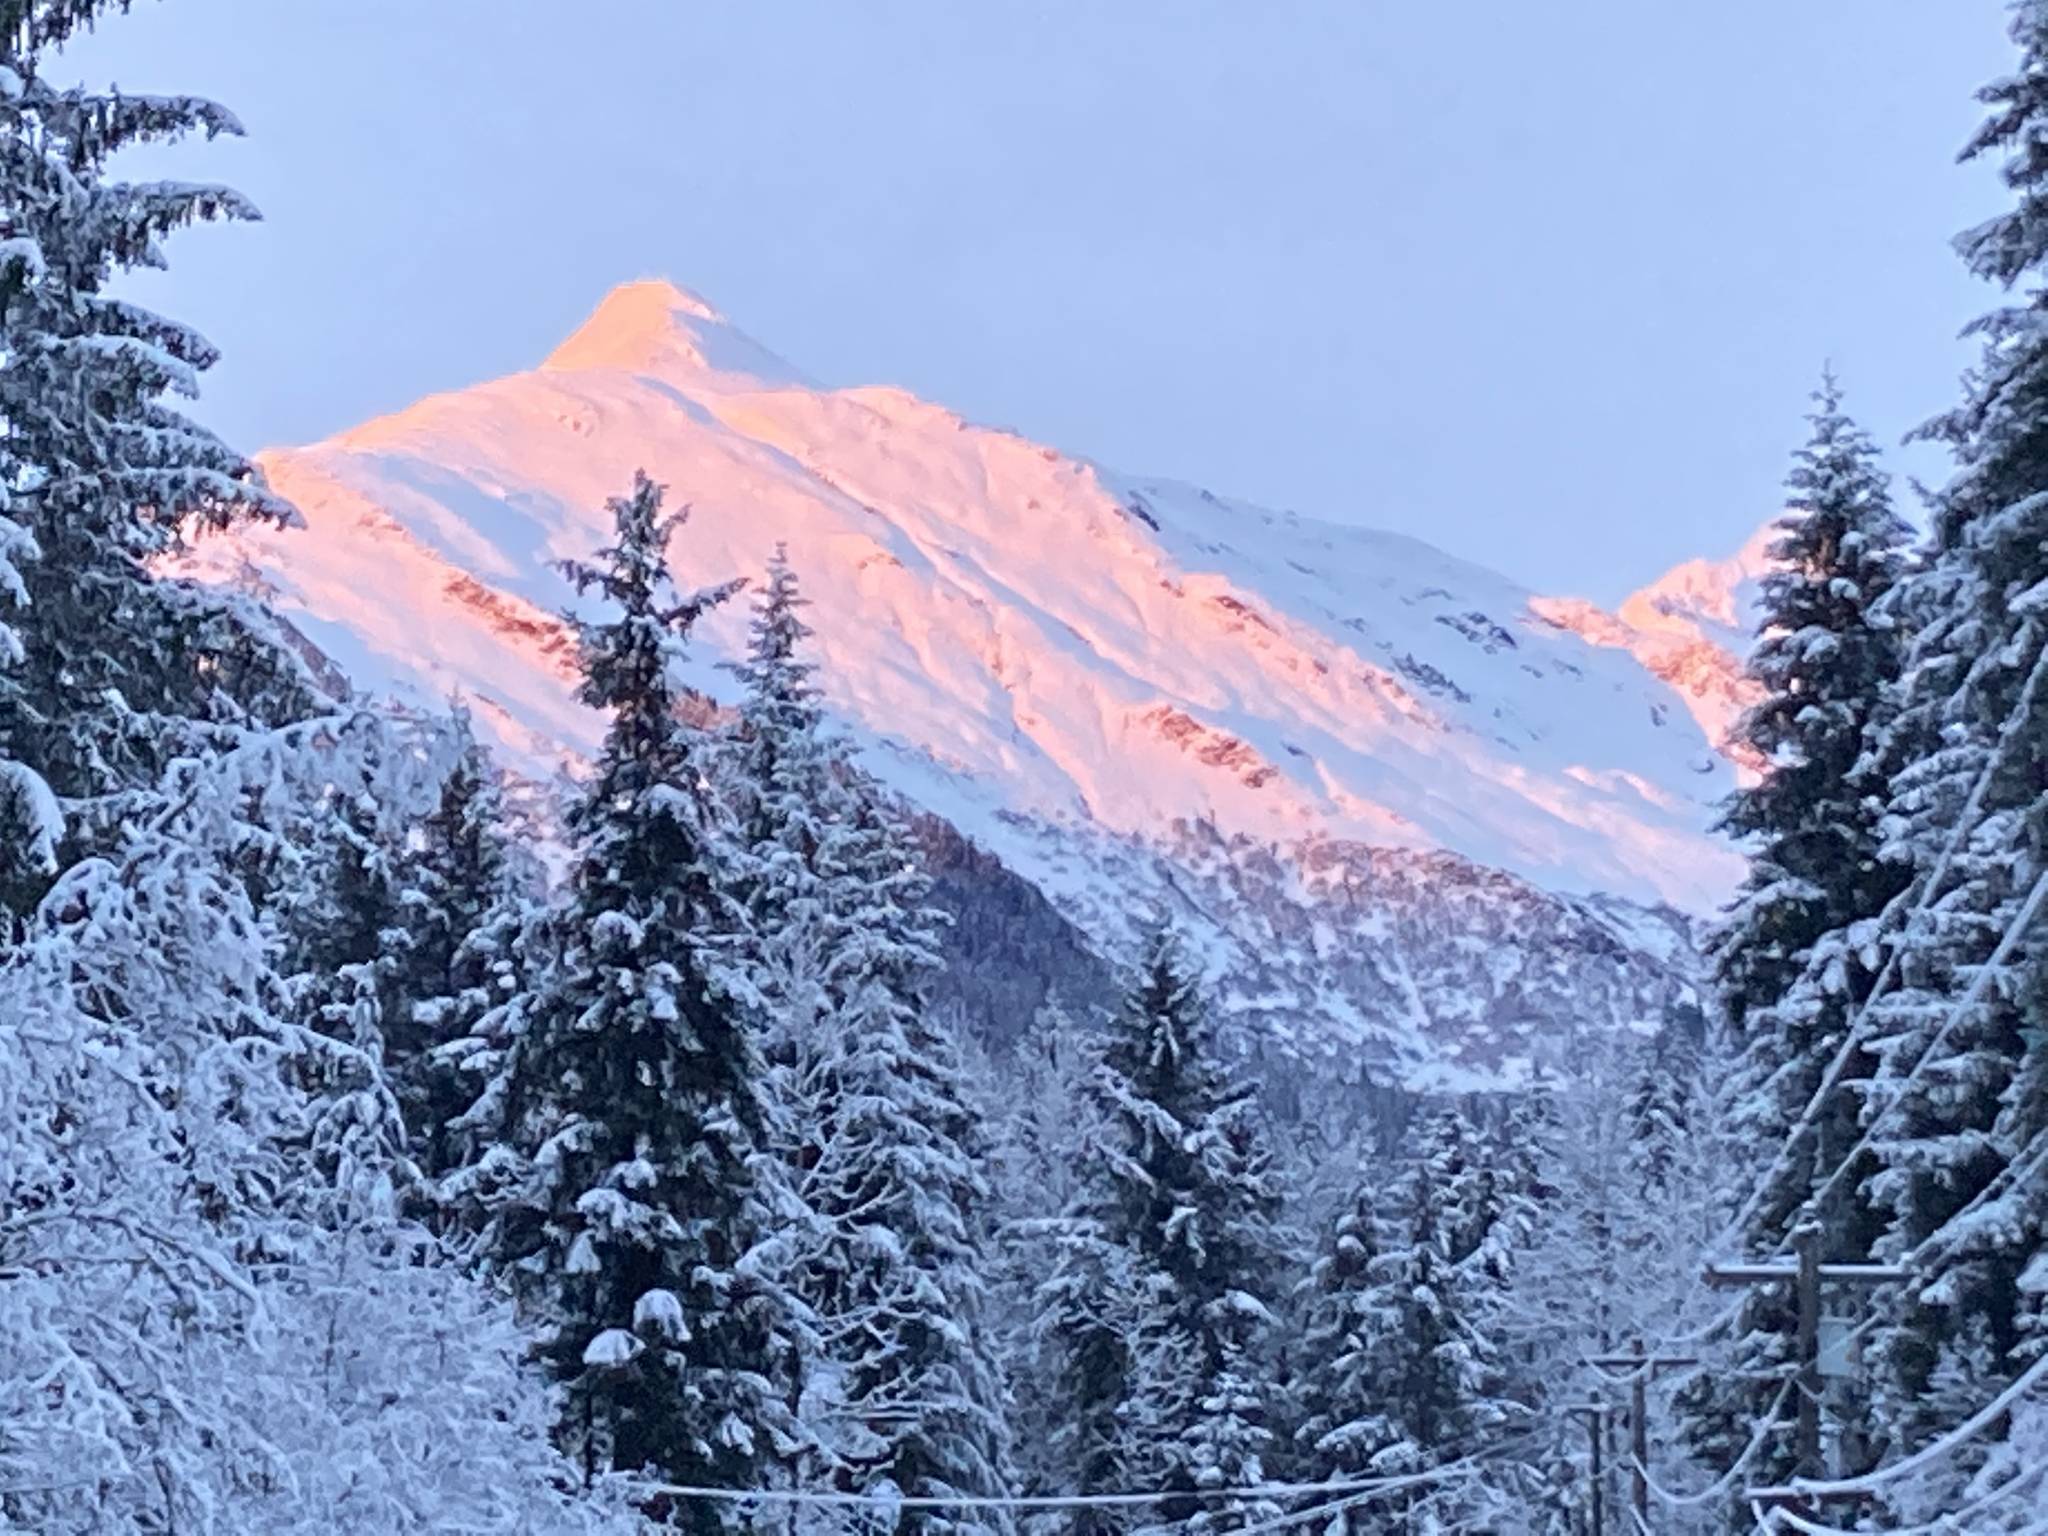 Mount McGinnis glows in the afternoon light on Dec. 13. (Courtesy Photo / Deborah Rudis)